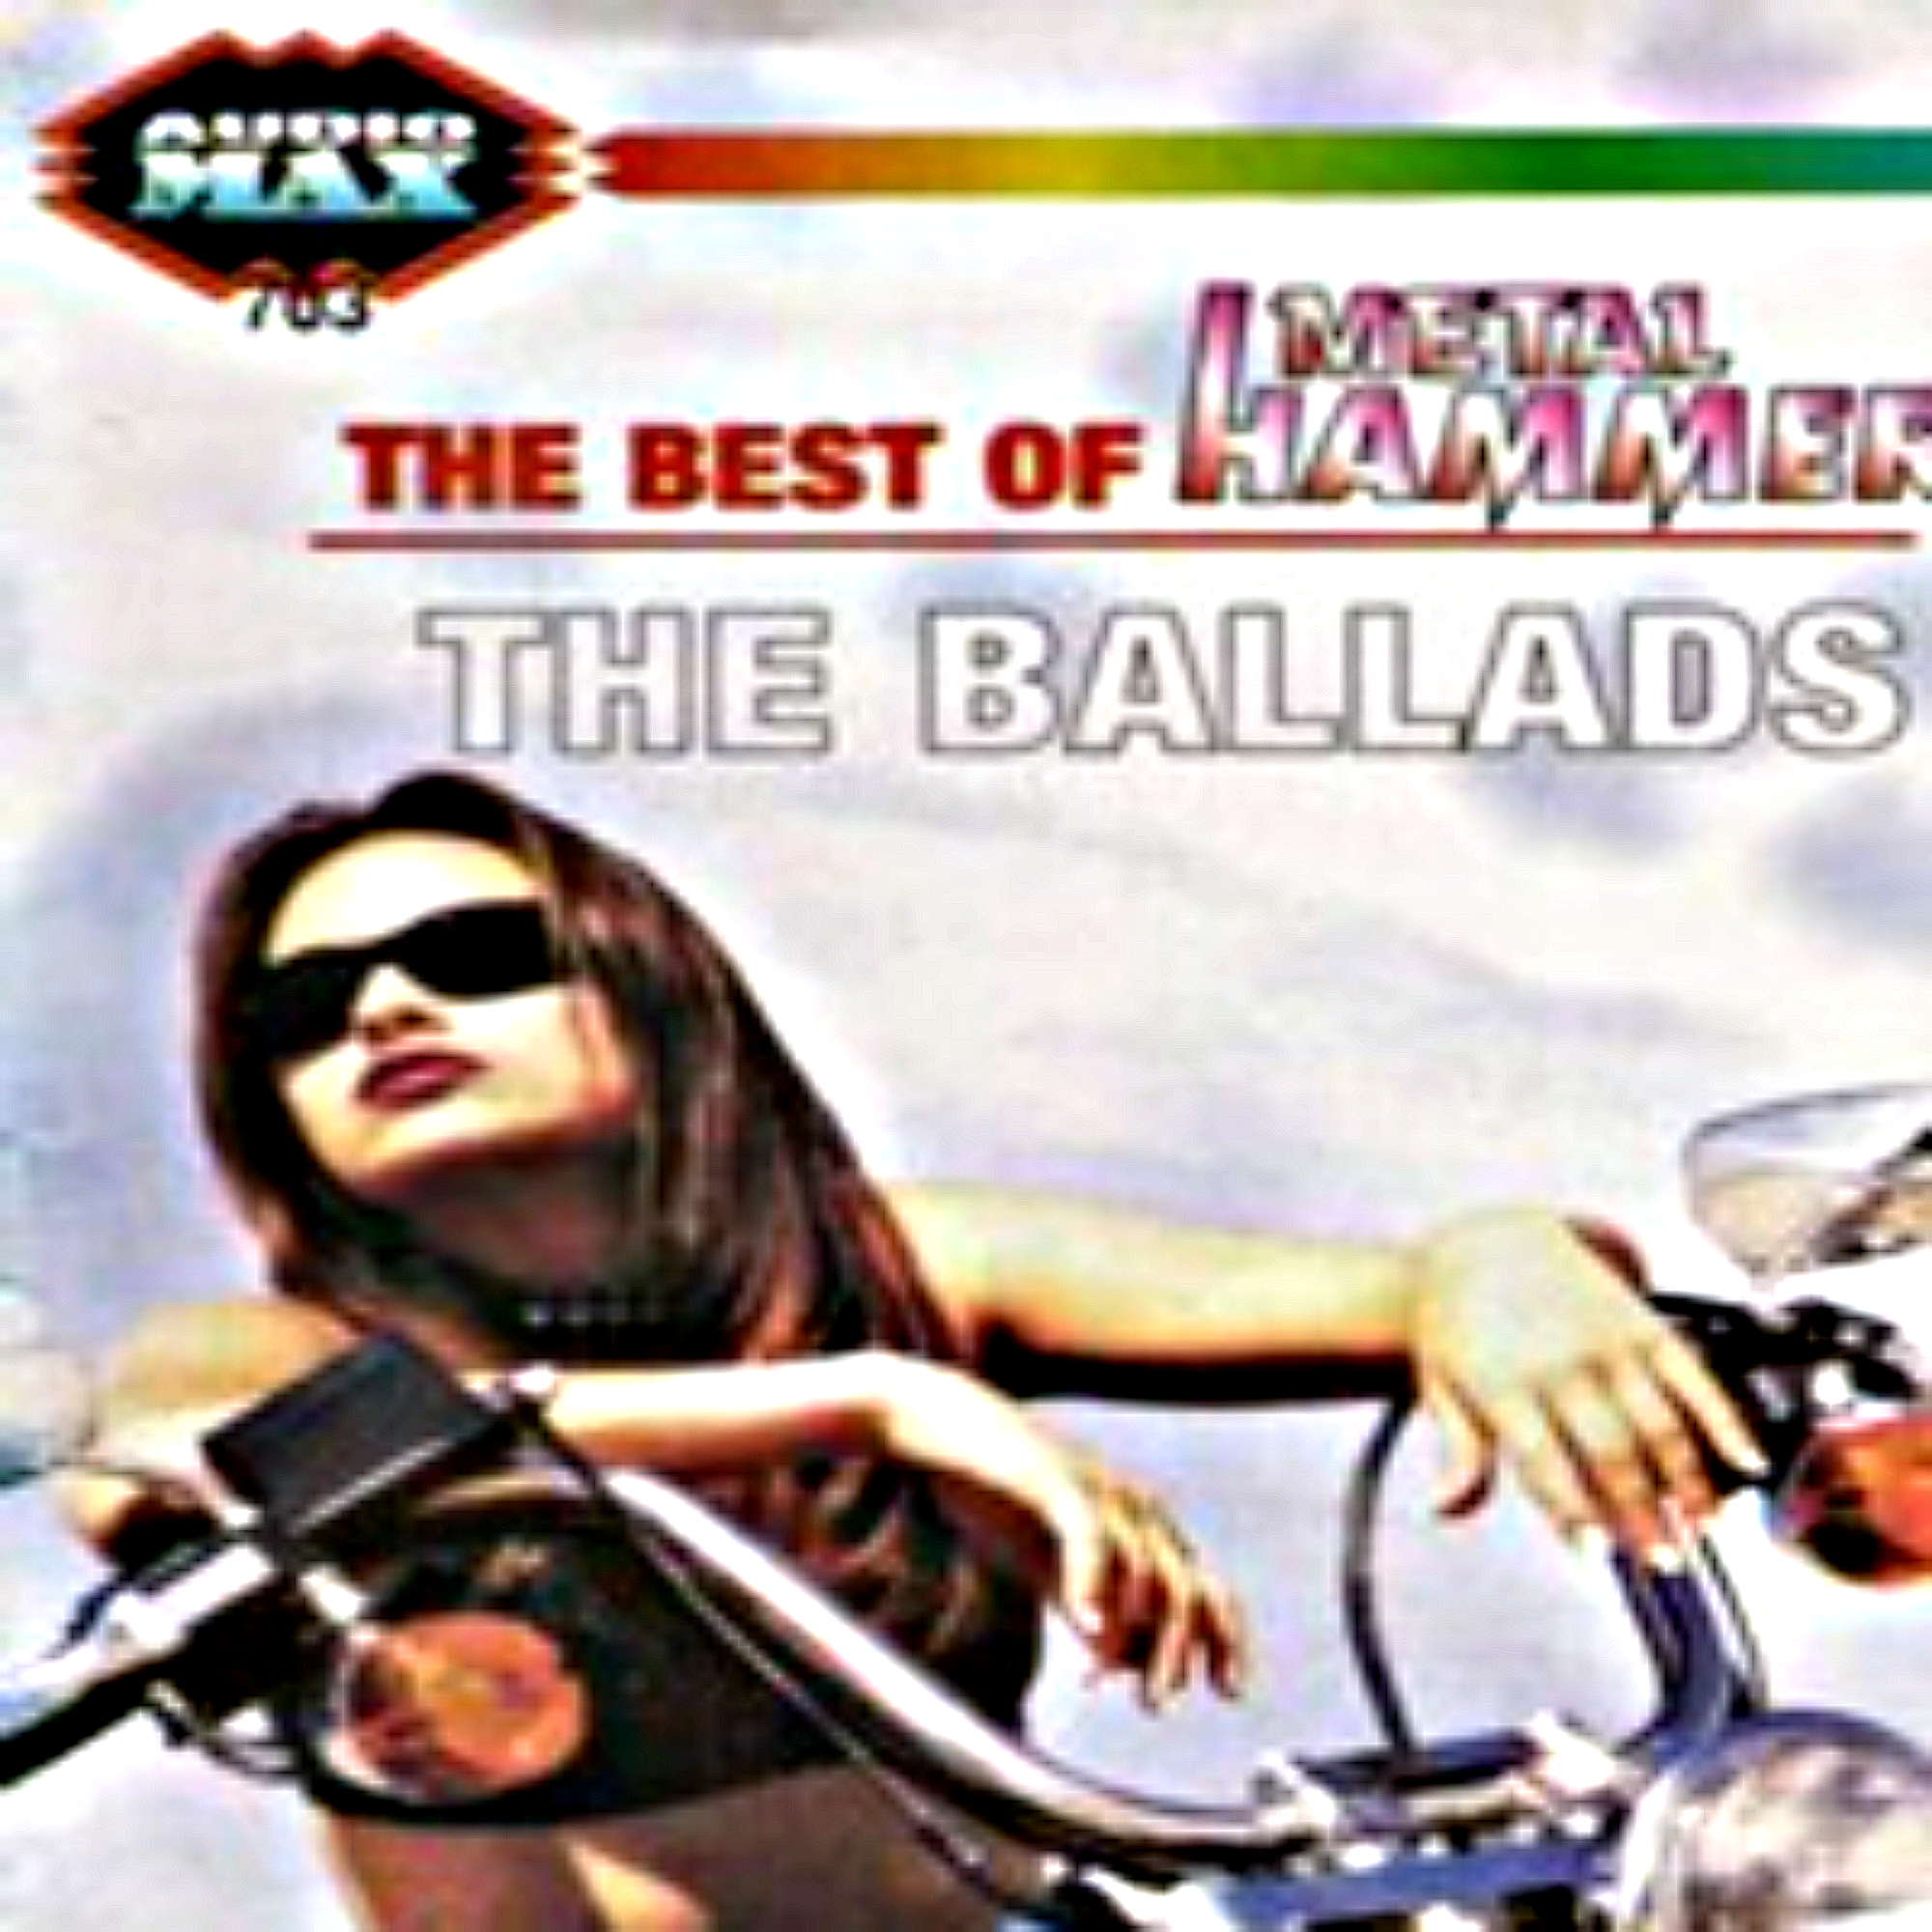 Sklad The Best Of Metal Hammer The Ballads